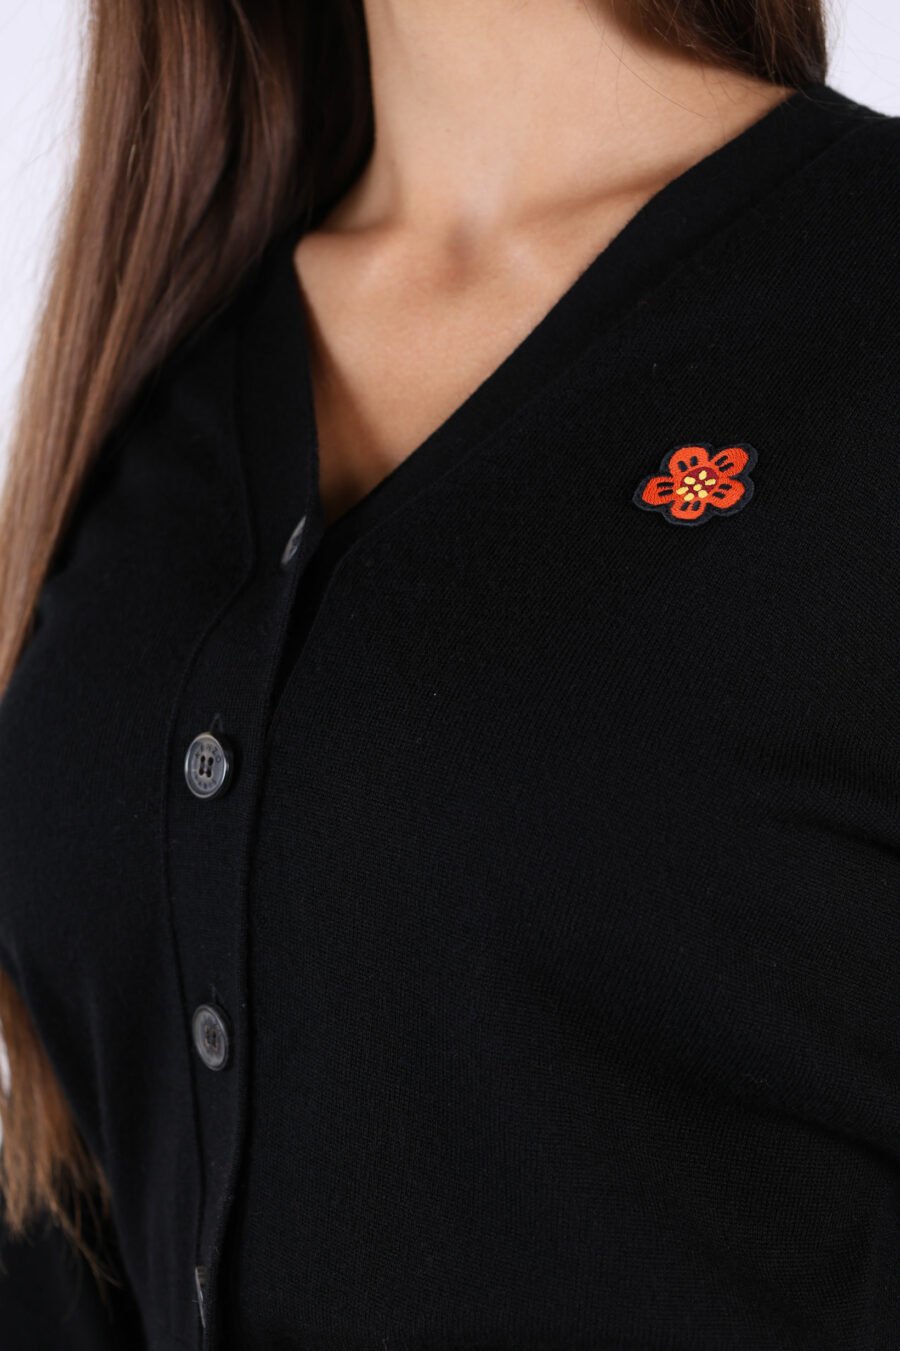 Camisola de lã preta com mini-logotipo "boke flower" - 361223054662202132